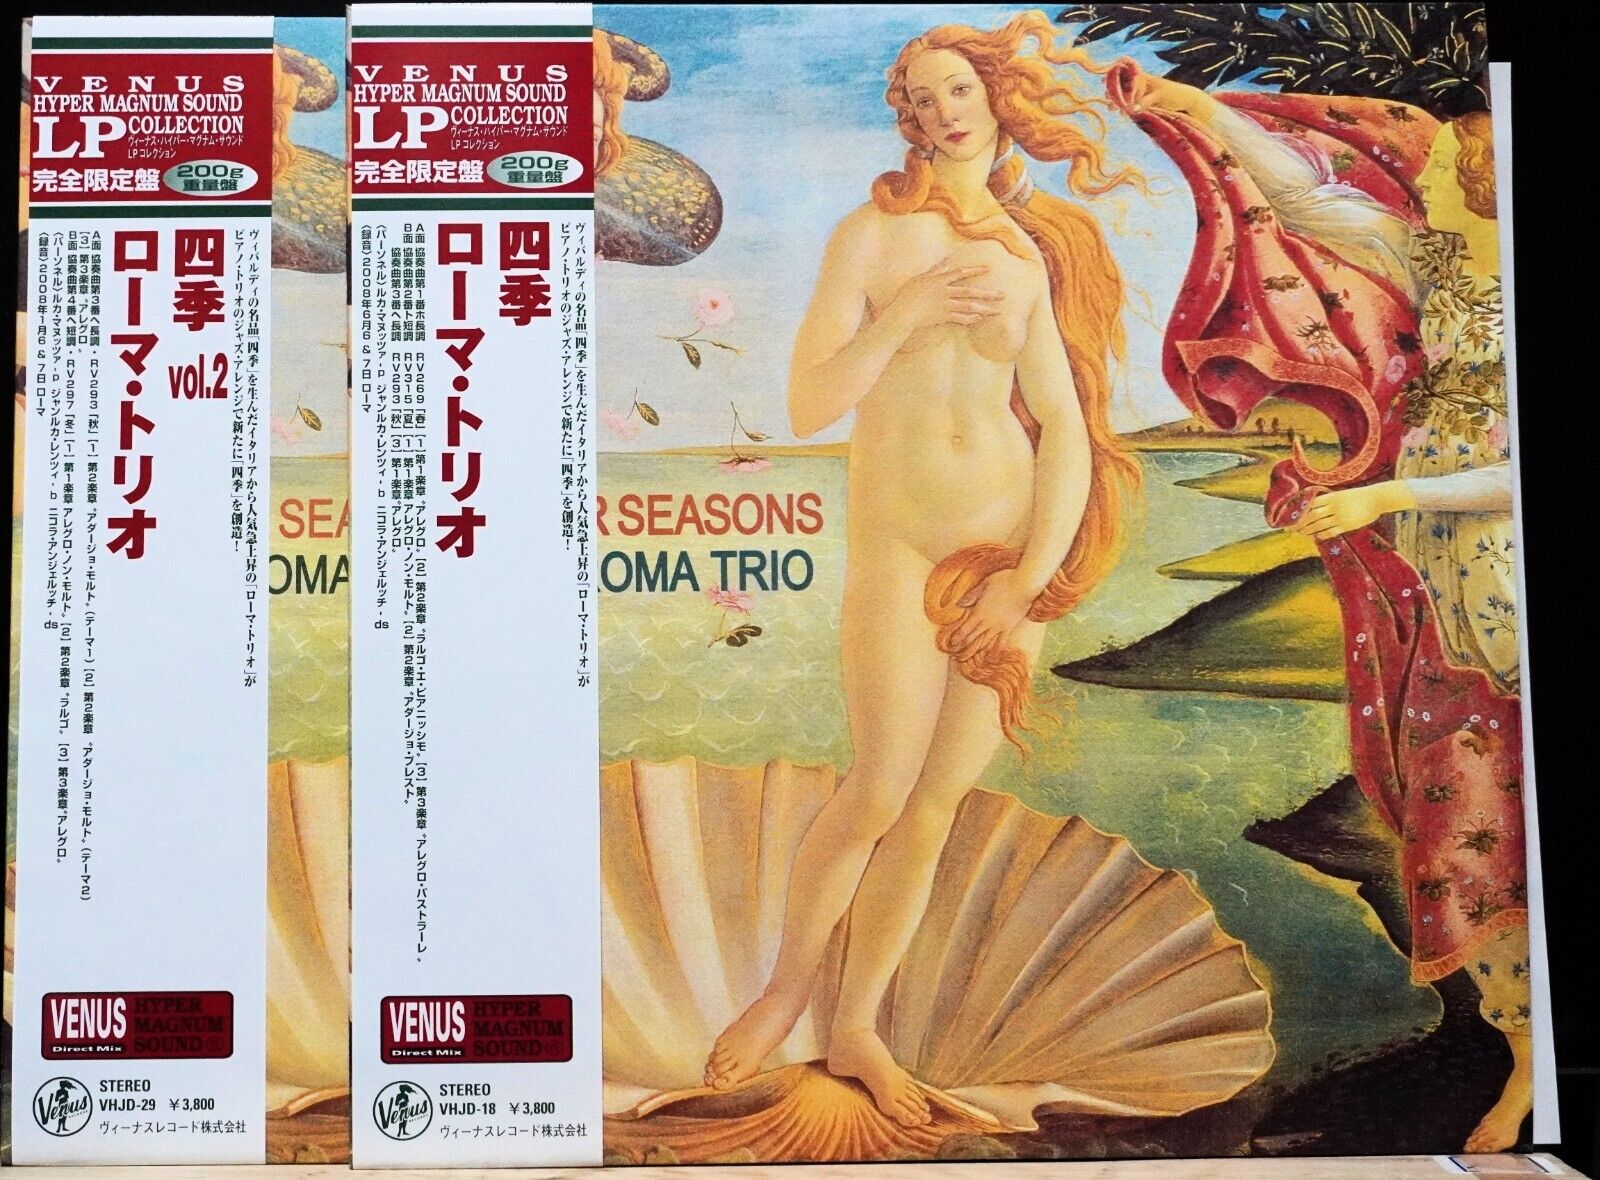 ROMA TRIO "FOUR SEASONS VOL.1+VOL.2" VENUS Japan 2xLP Vinyl OBI 200g AUDIOPHILE